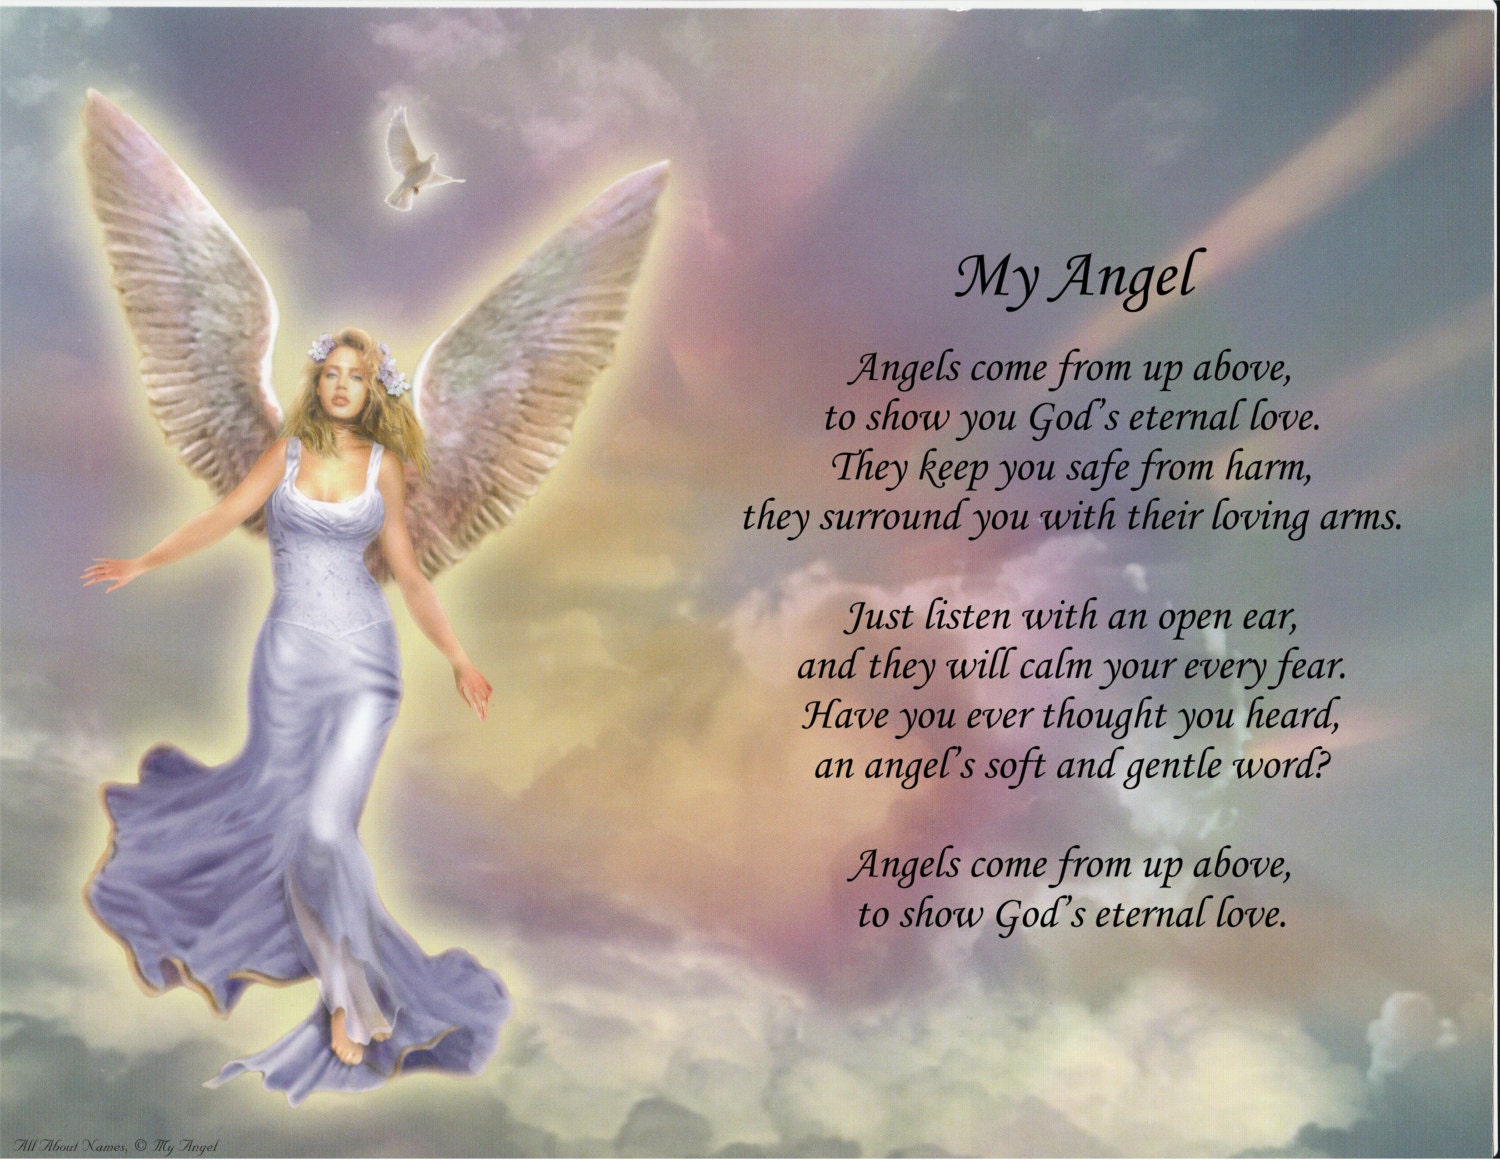 Inspirational Poem My Angel